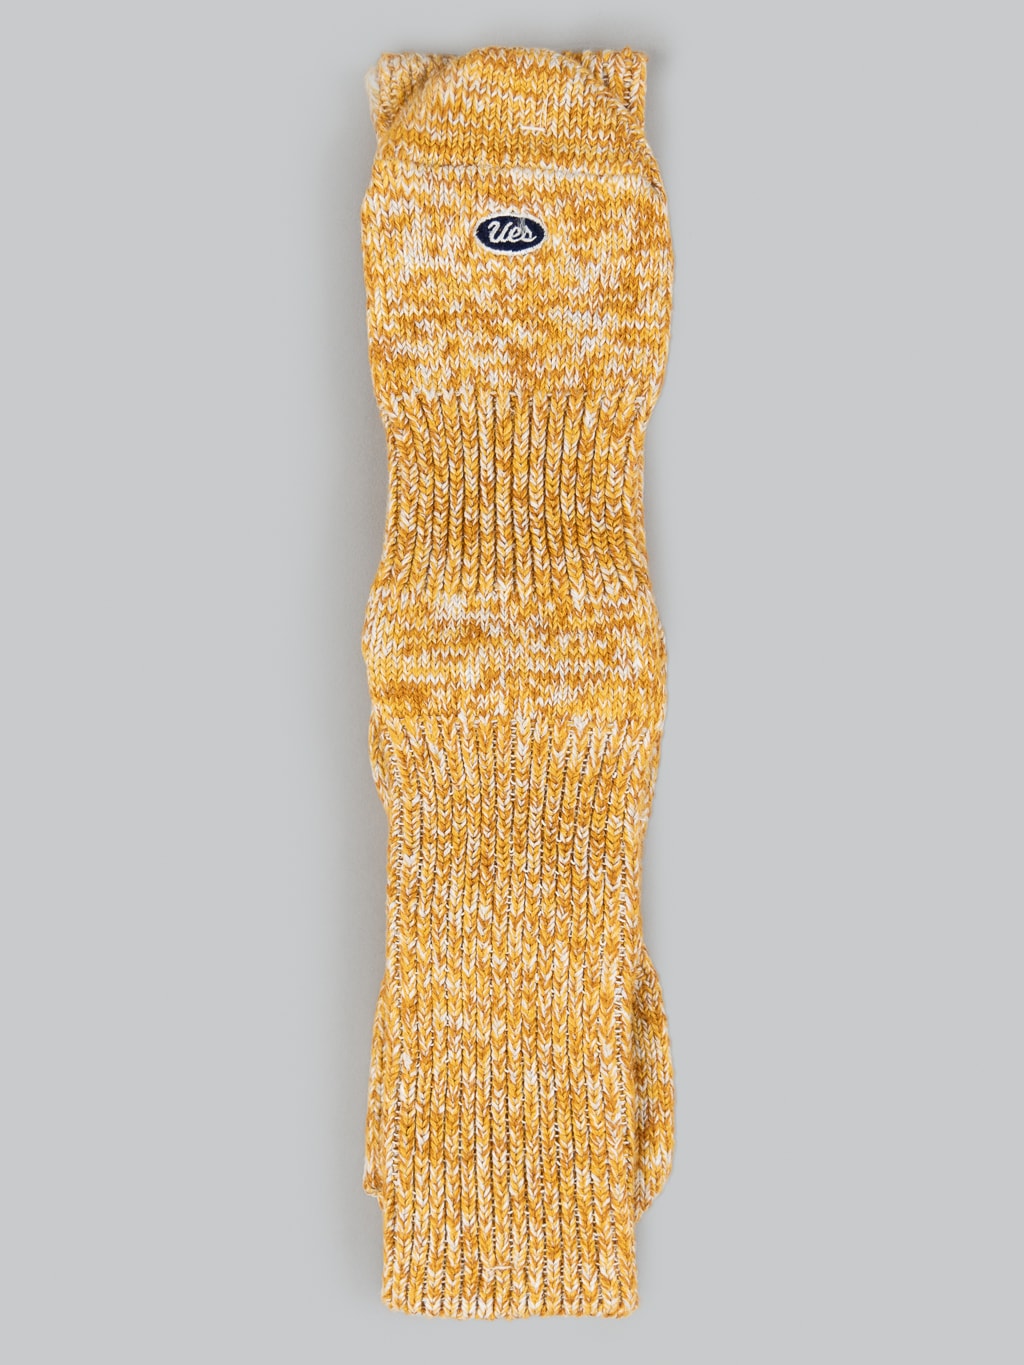 ues denim crew length socks yellow